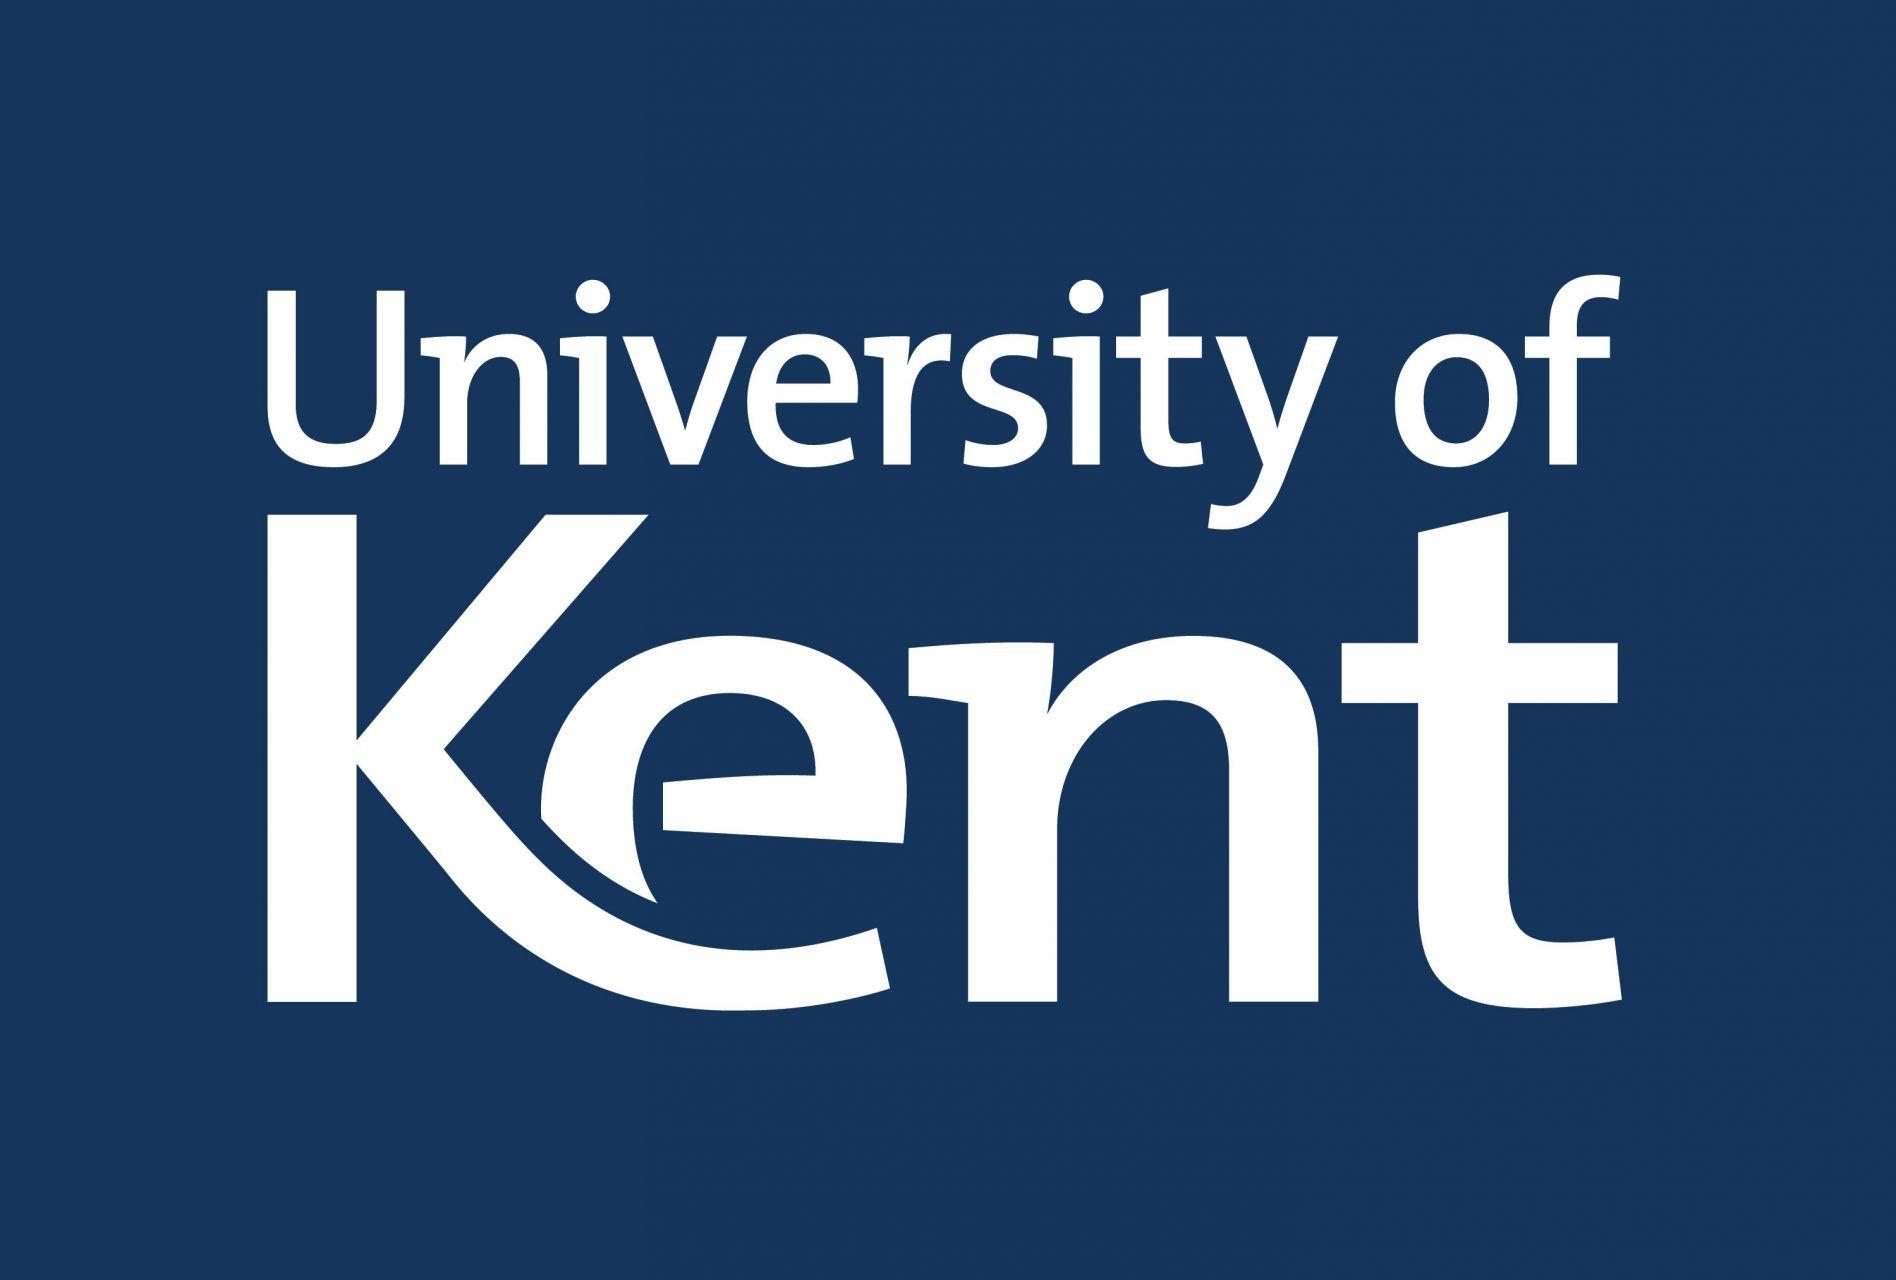 Dark Blue and White Logo - Joint statement between University of Kent, UCU University of Kent